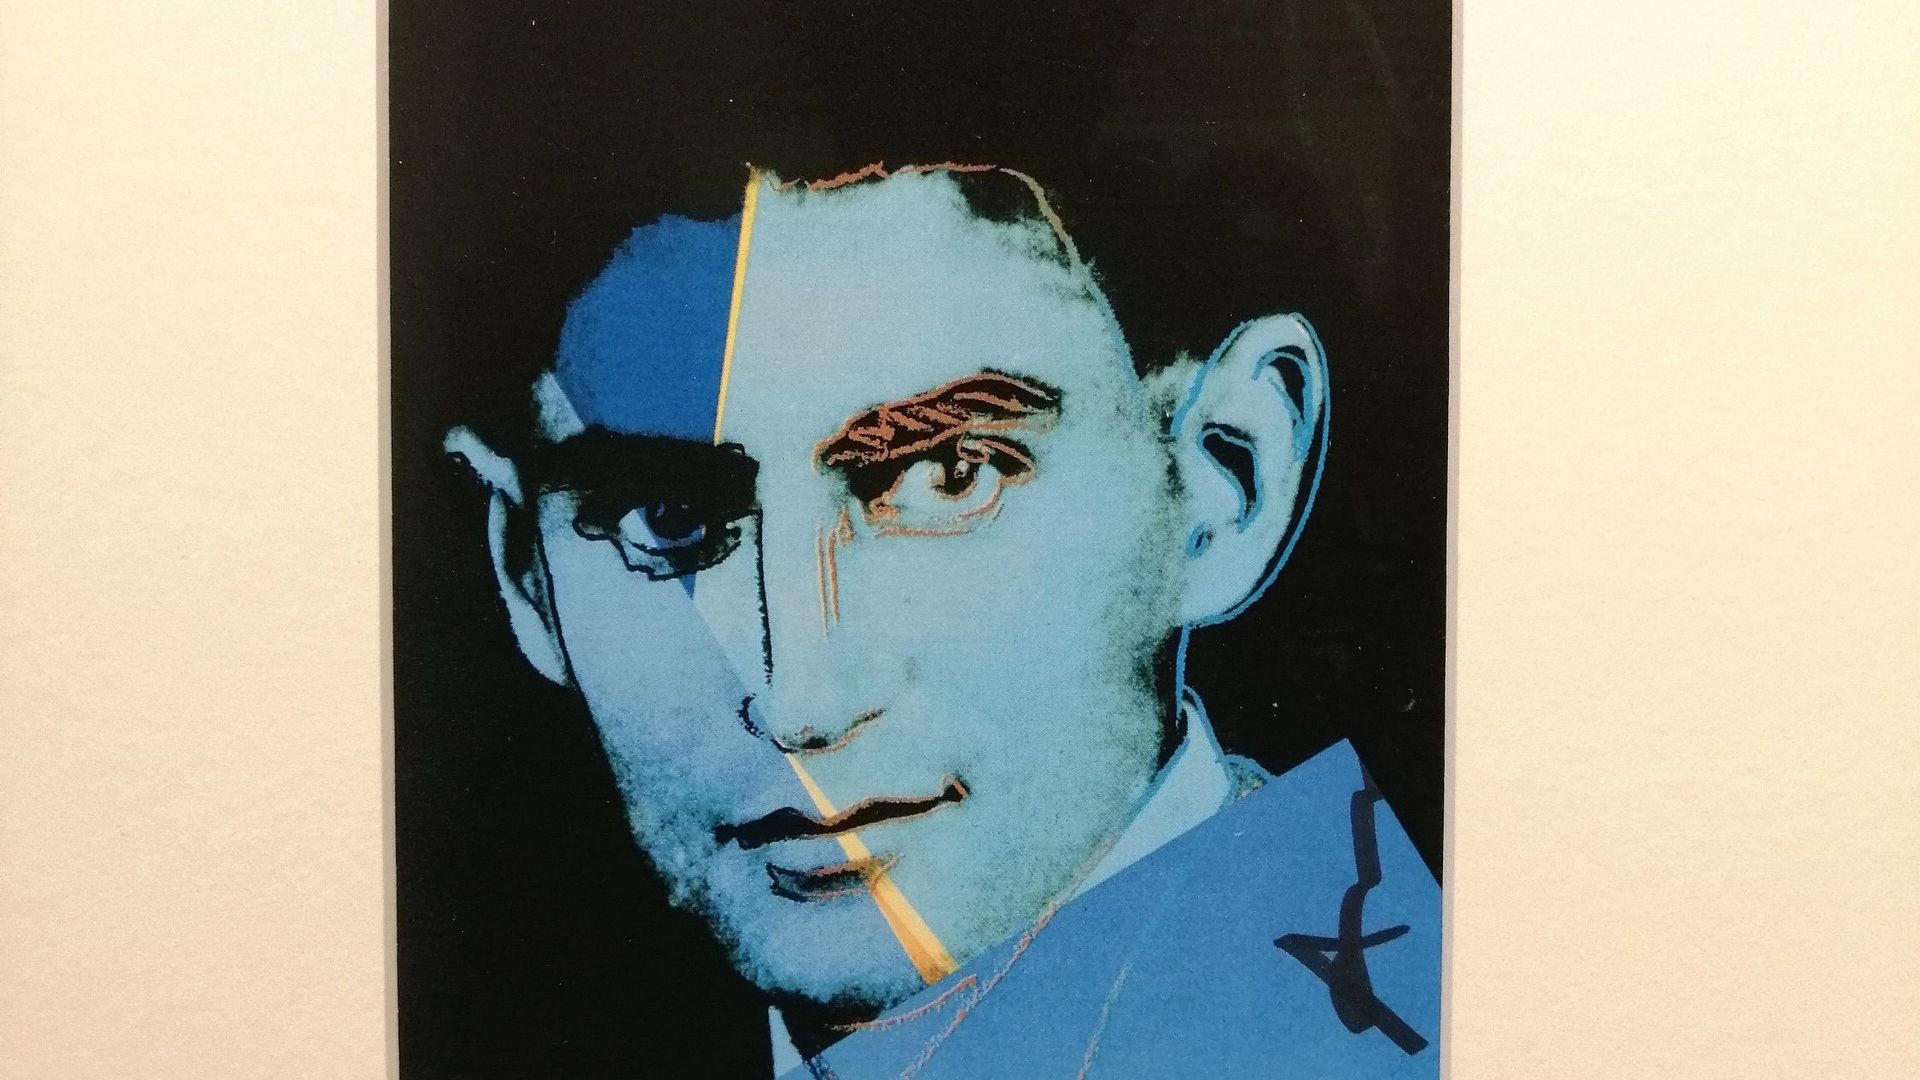 Franz Kakfa dans la série "Ten Portaits of Jews of the Twentieth Century", Andy Warhol -1980